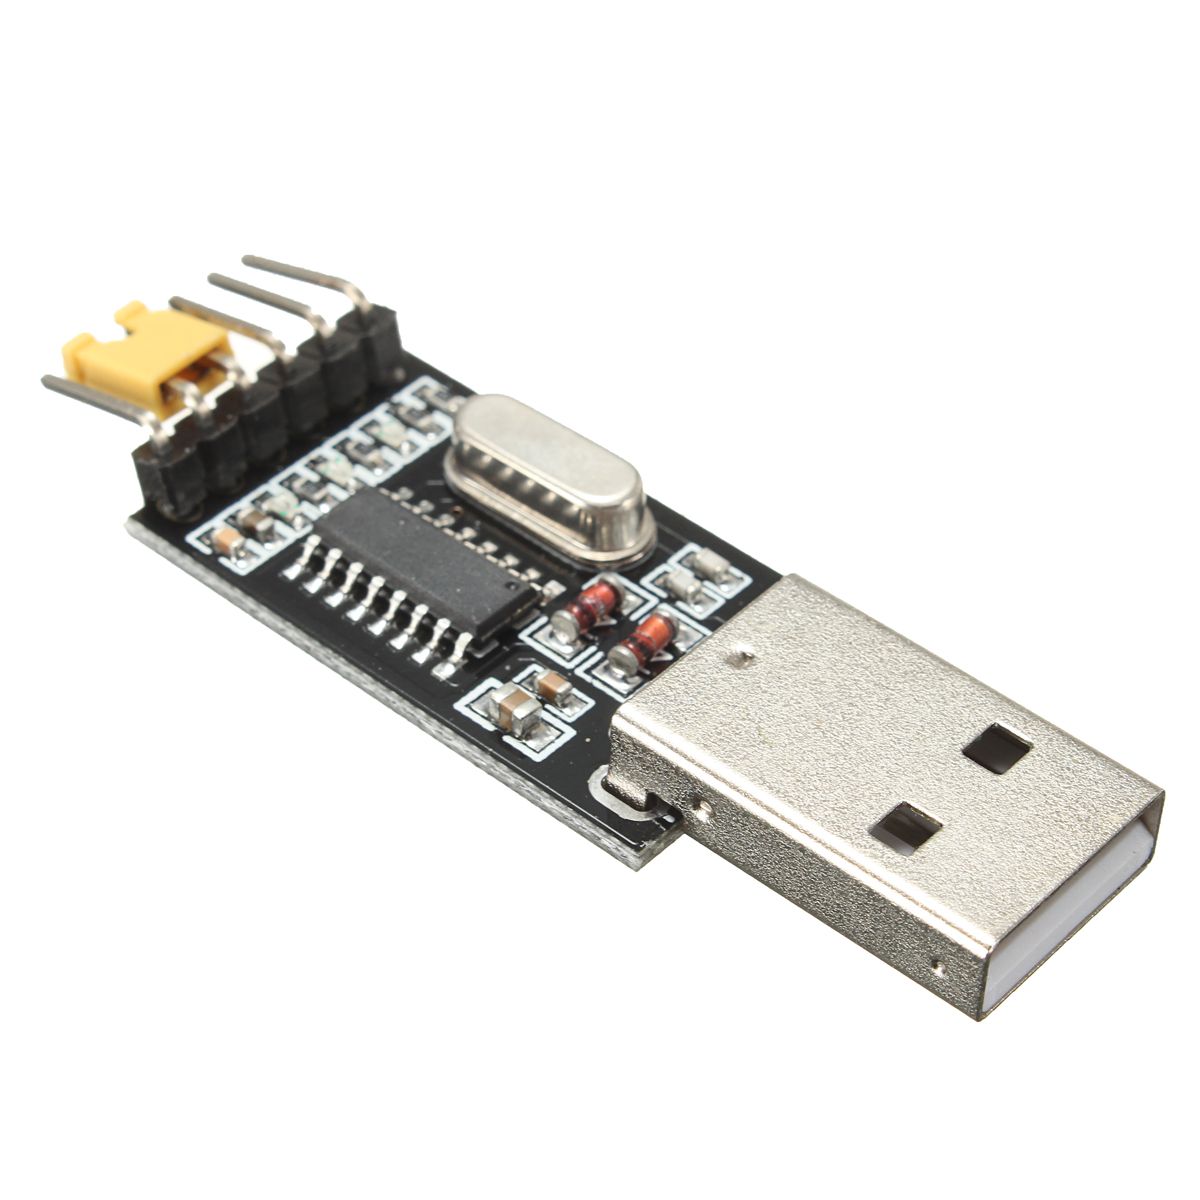 33V-5V-USB-to-TTL-Converter-CH340G-UART-Serial-Adapter-Module-STC-1232728